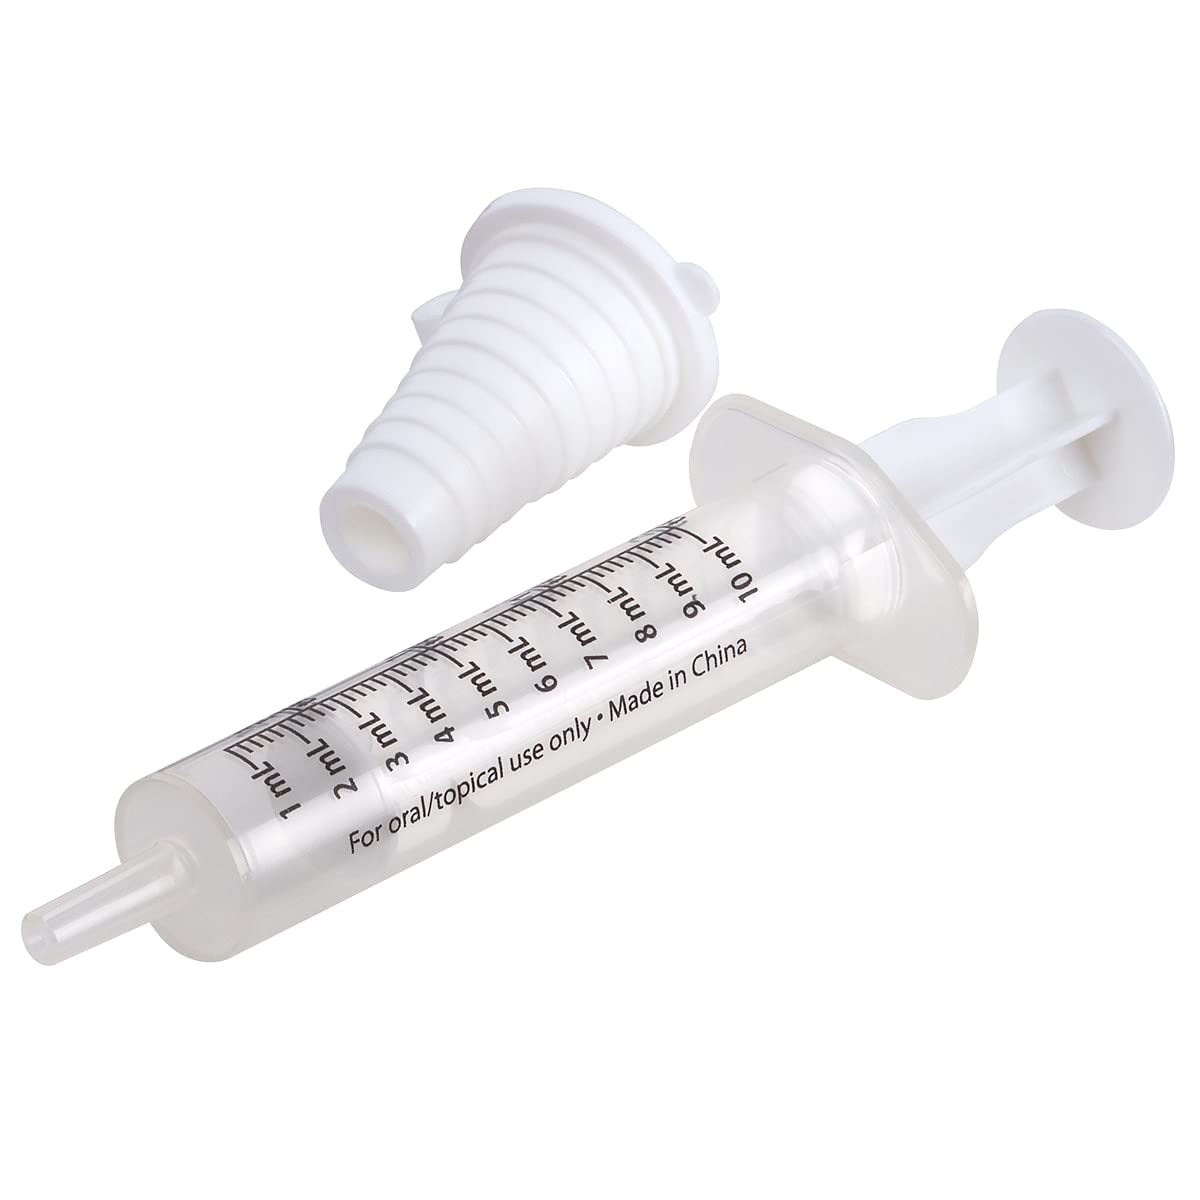 EZY DOSE Kids Baby Oral Syringe Dispenser Calibrated for Liquid Medicine. 10 mL/2 TSP w/Bottle Adapter $2.27 Free Shippi